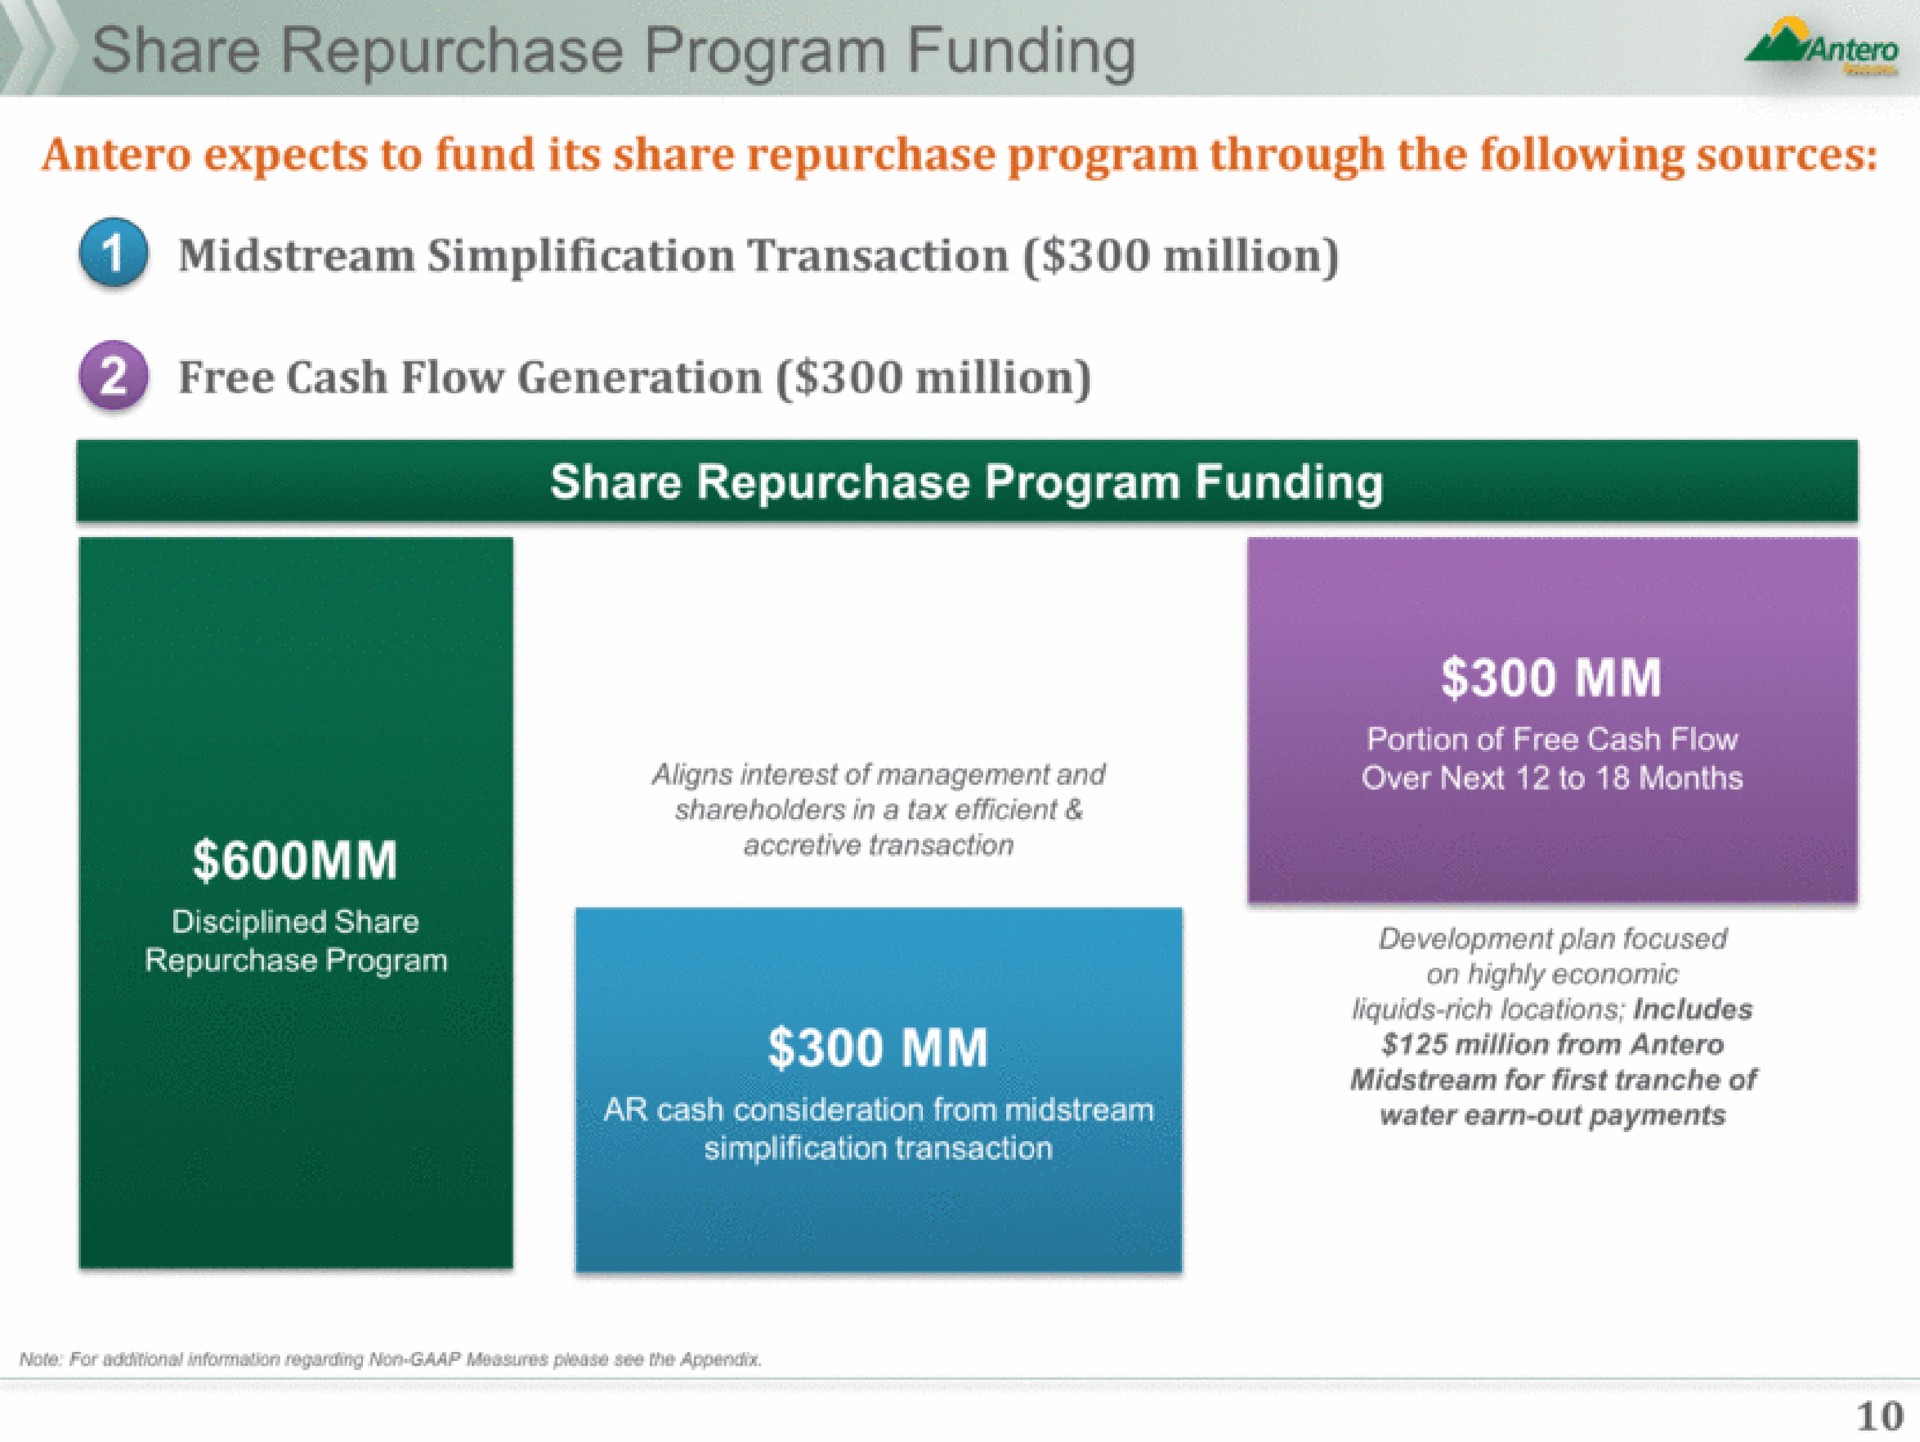 share repurchase program funding alerts share repurchase program funding | Antero Midstream Partners